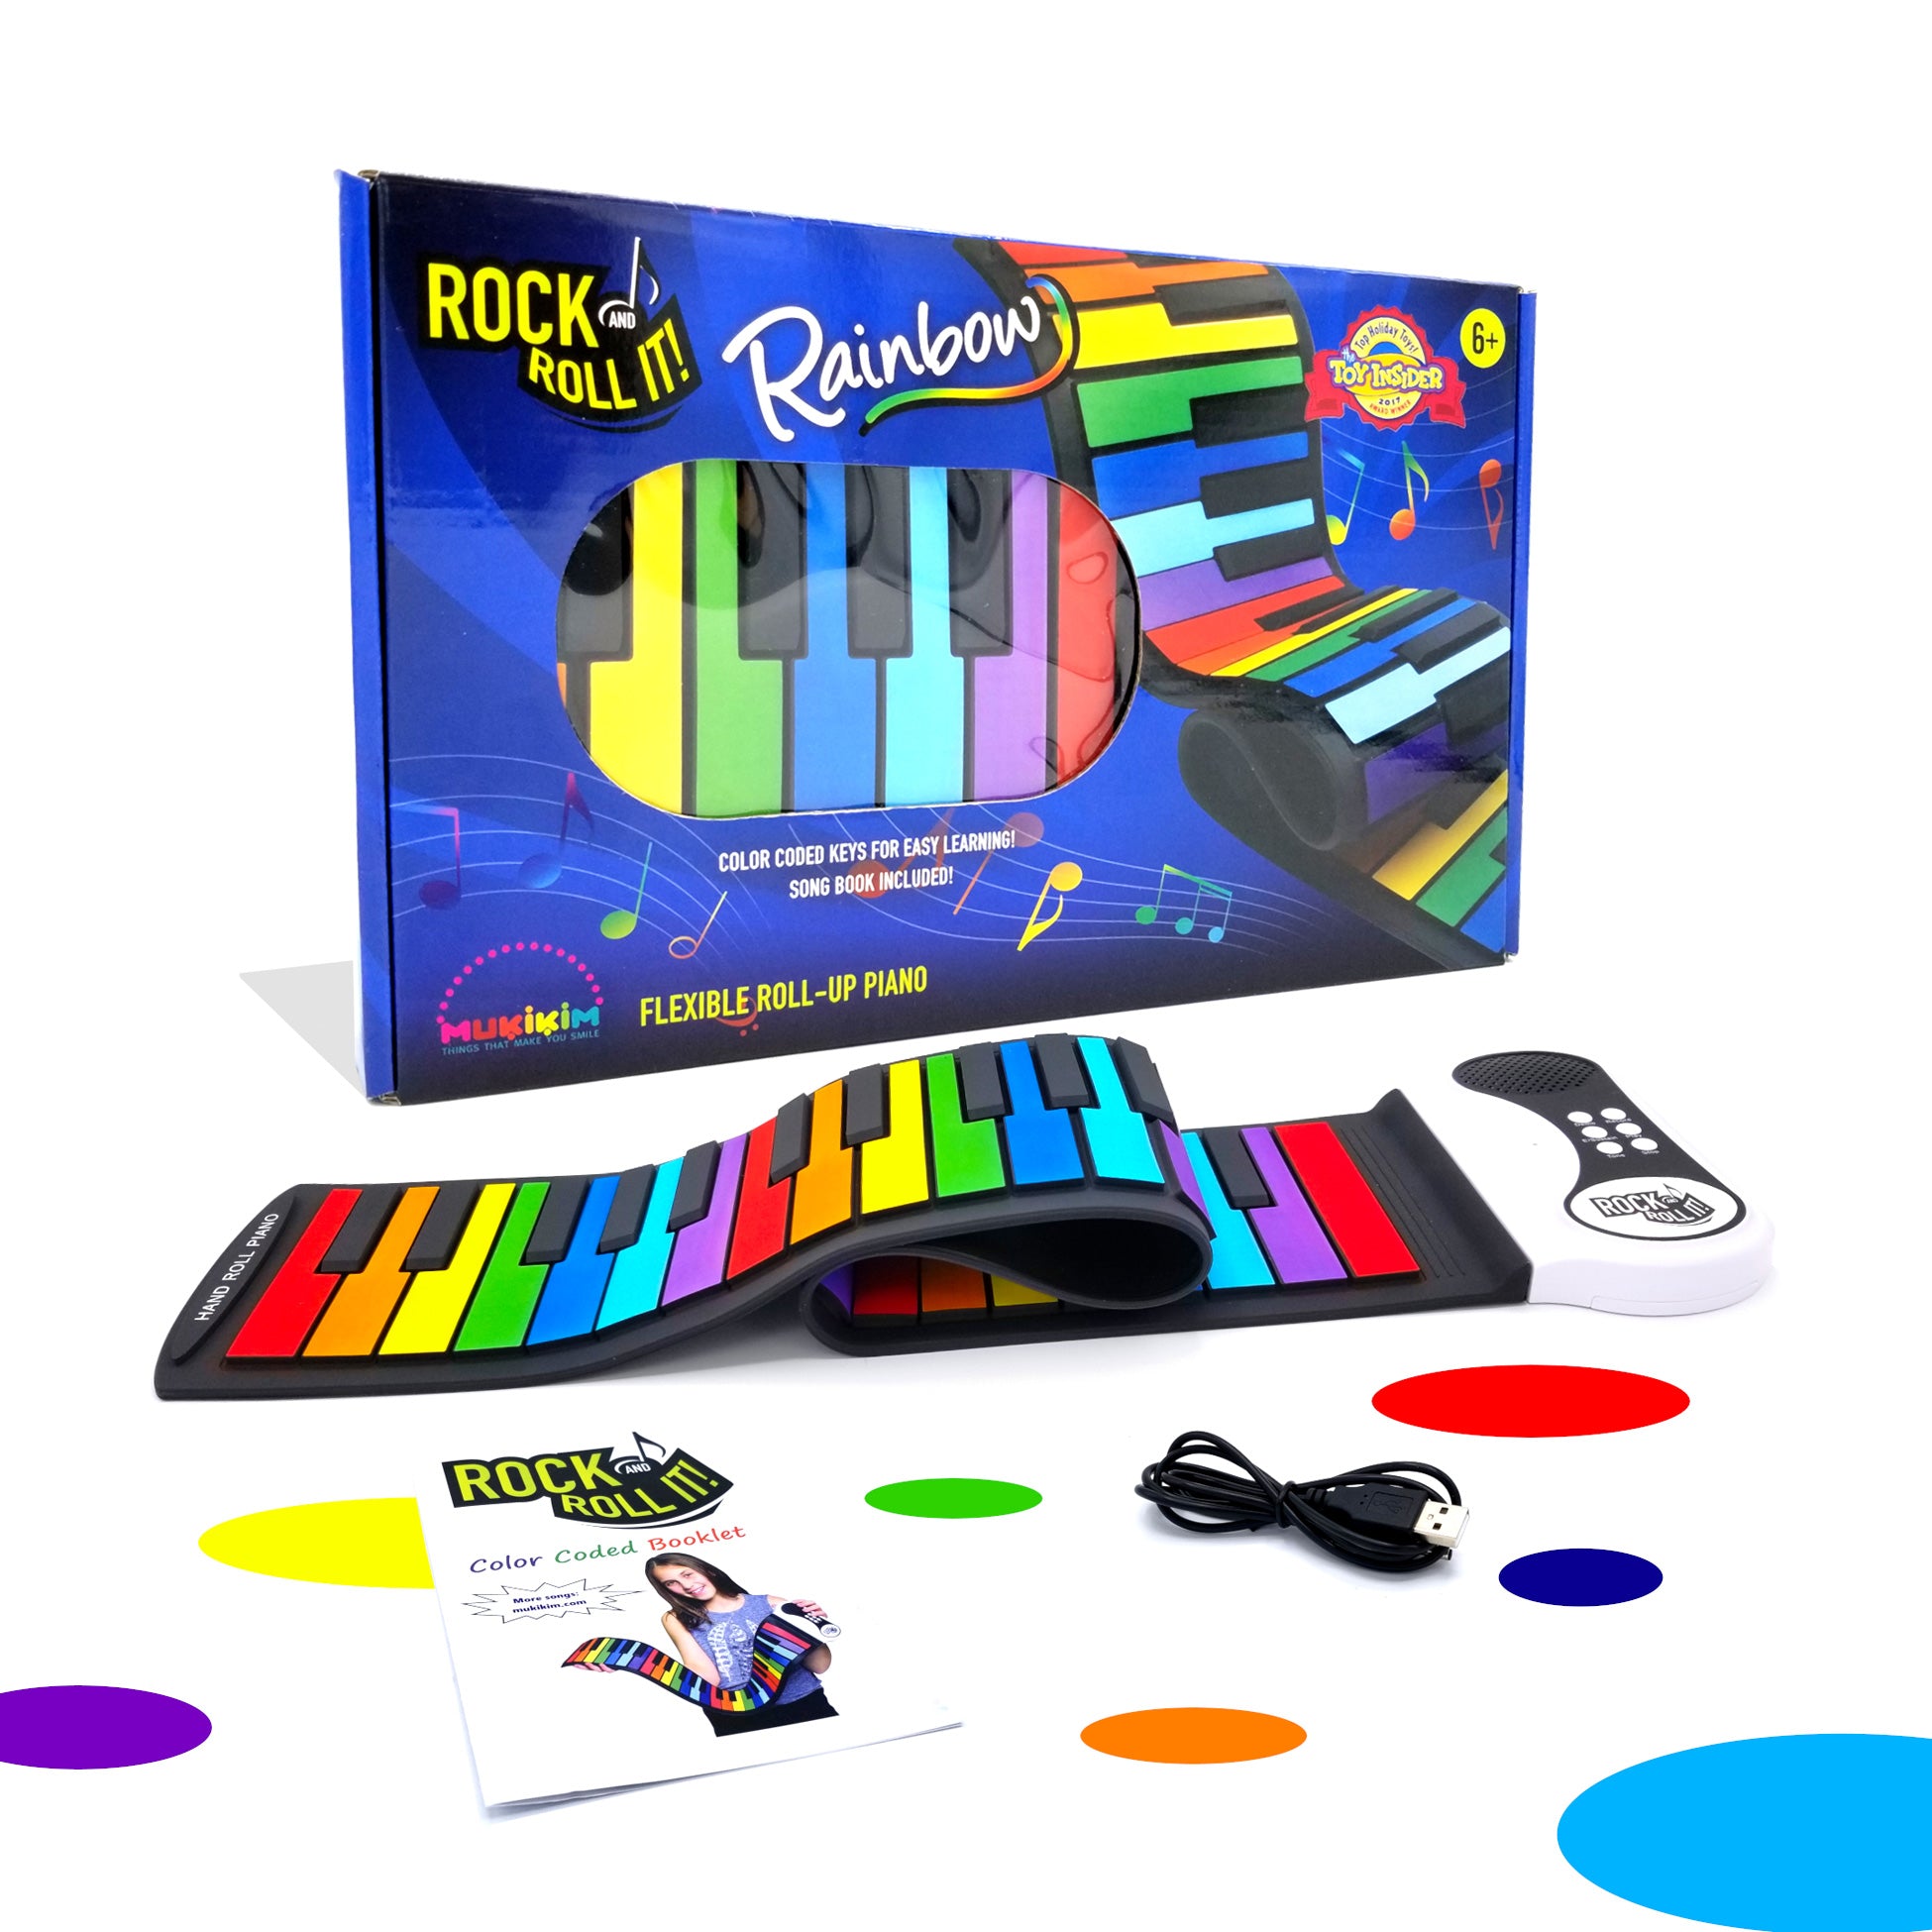 Rock & Roll It Rainbow Piano Flexible - Mukikim - (Edad 6+)